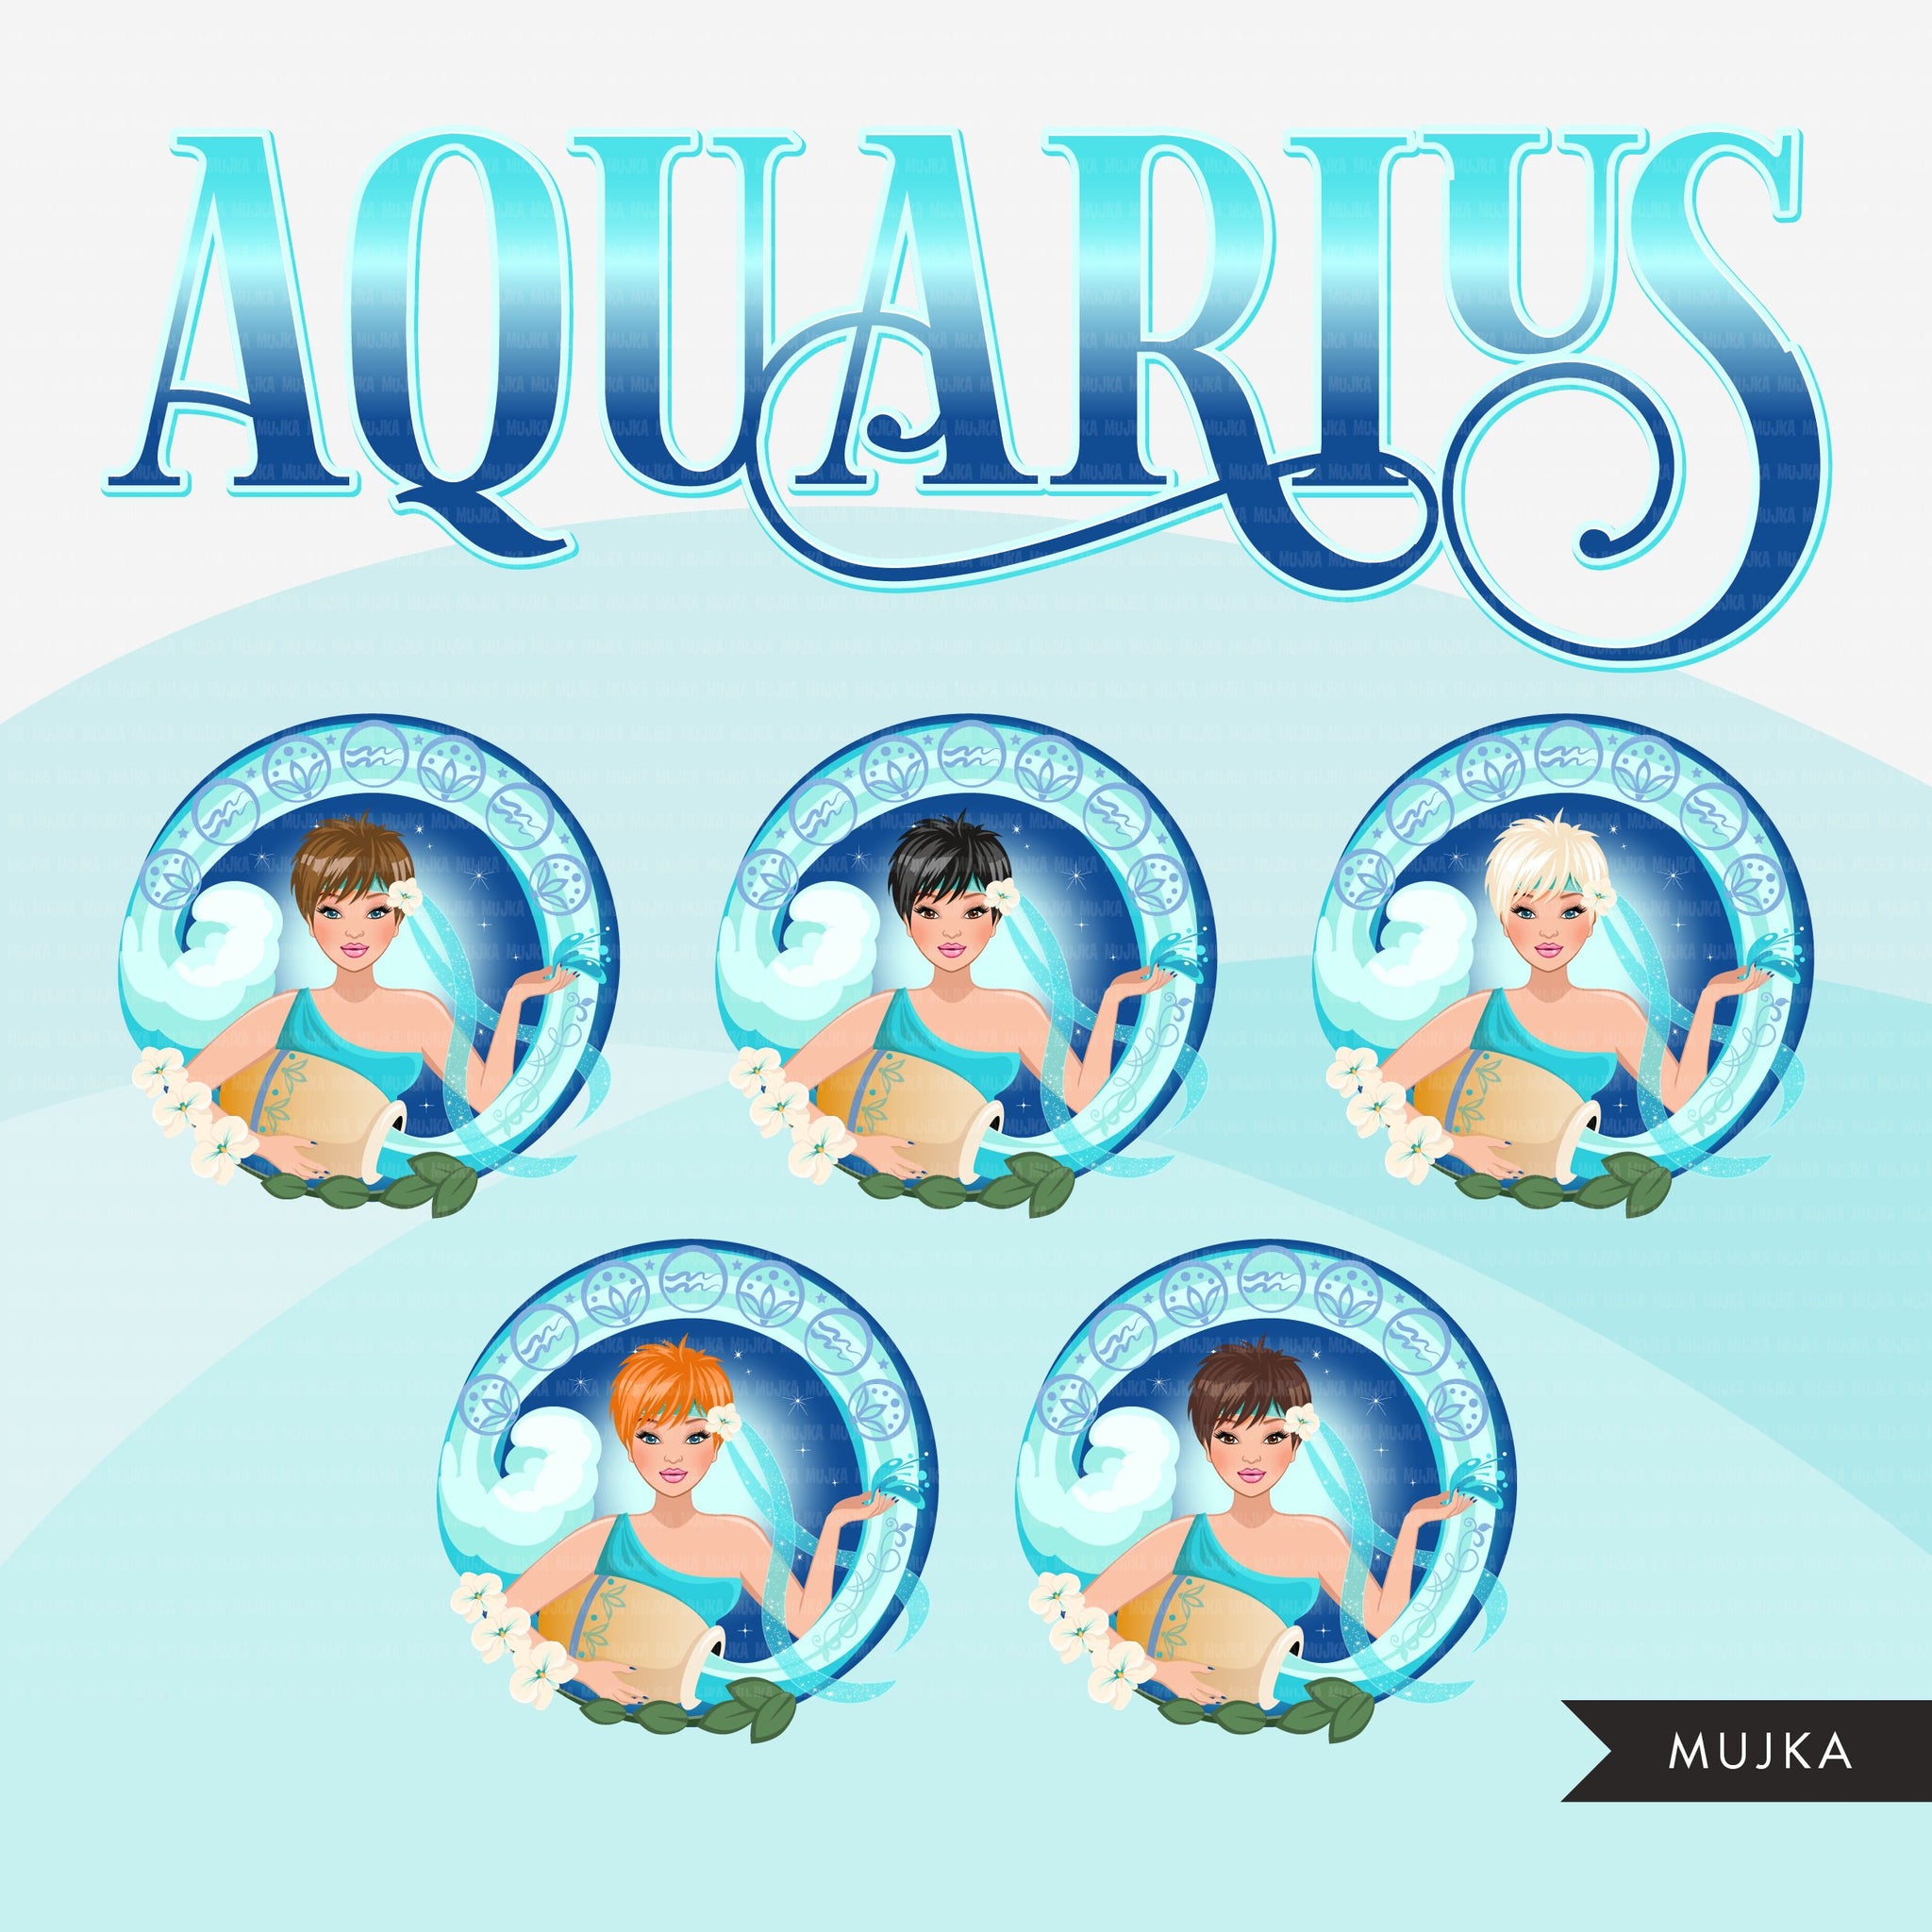 Zodiac Aquarius Clipart, Descarga digital Png, Gráficos de sublimación para Cricut &amp; Cameo, Diseños de signos del horóscopo de mujer de pelo Pixie caucásico